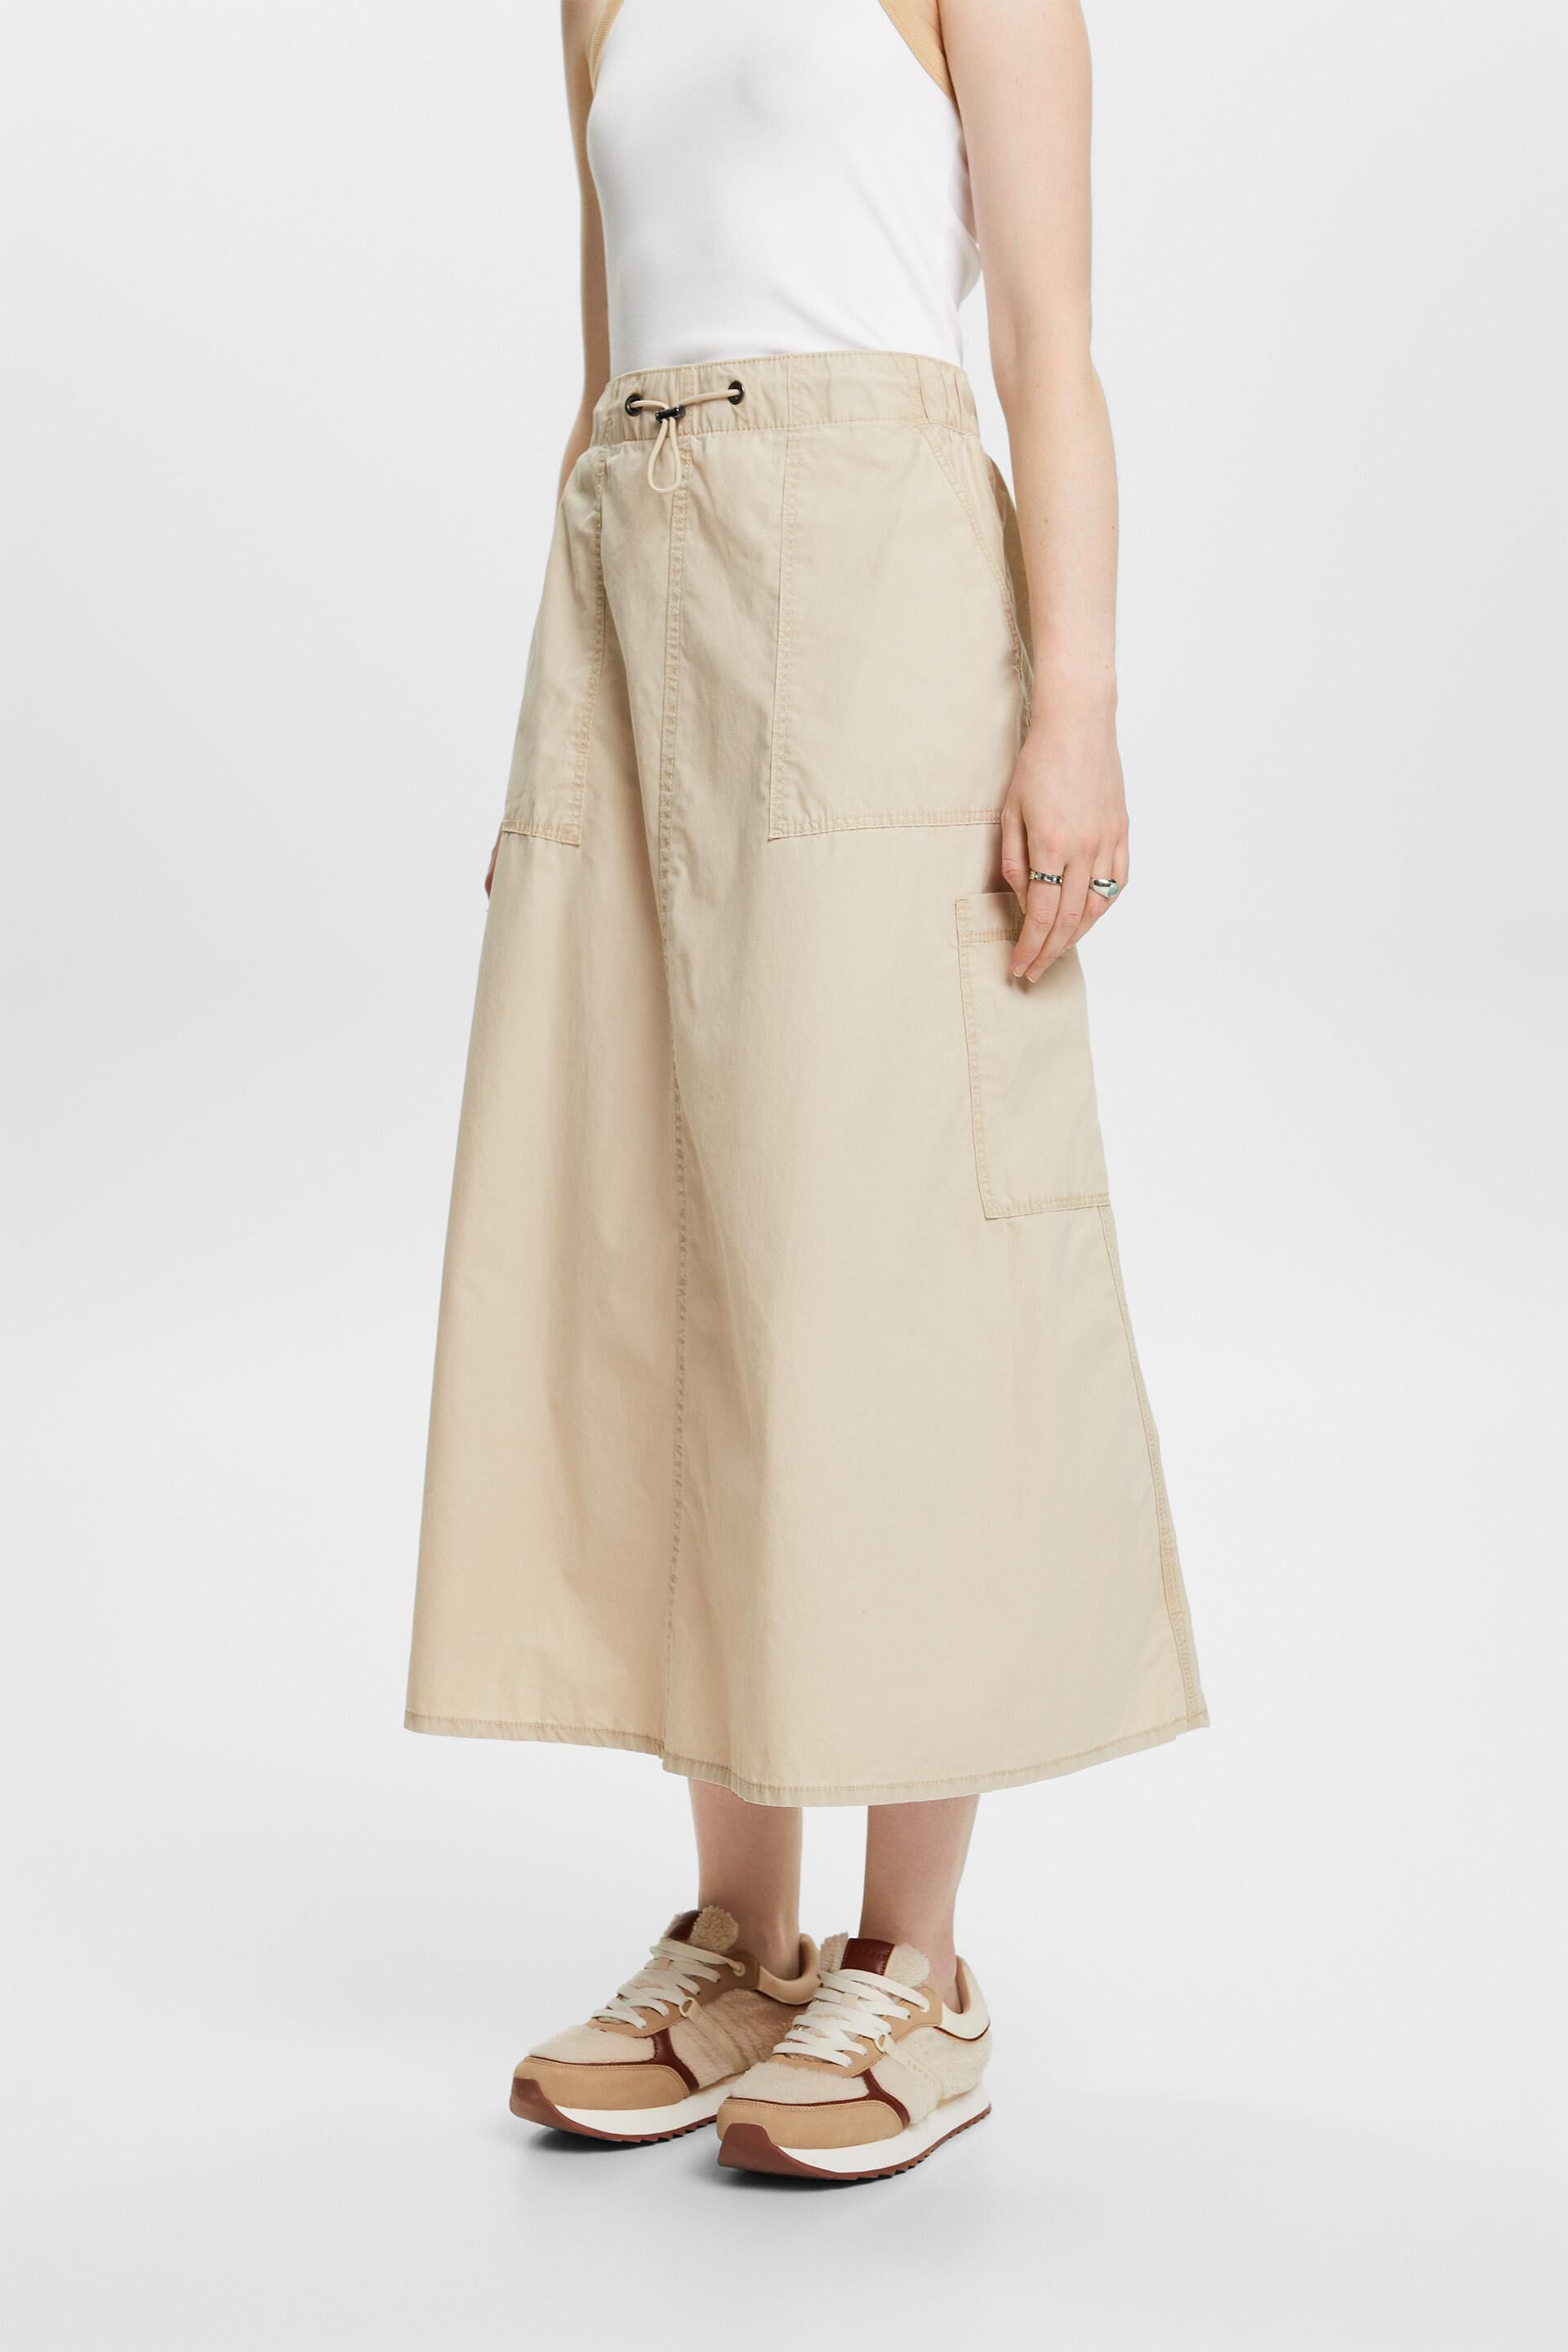 Esprit 100% Pull-on cargo skirt, cotton